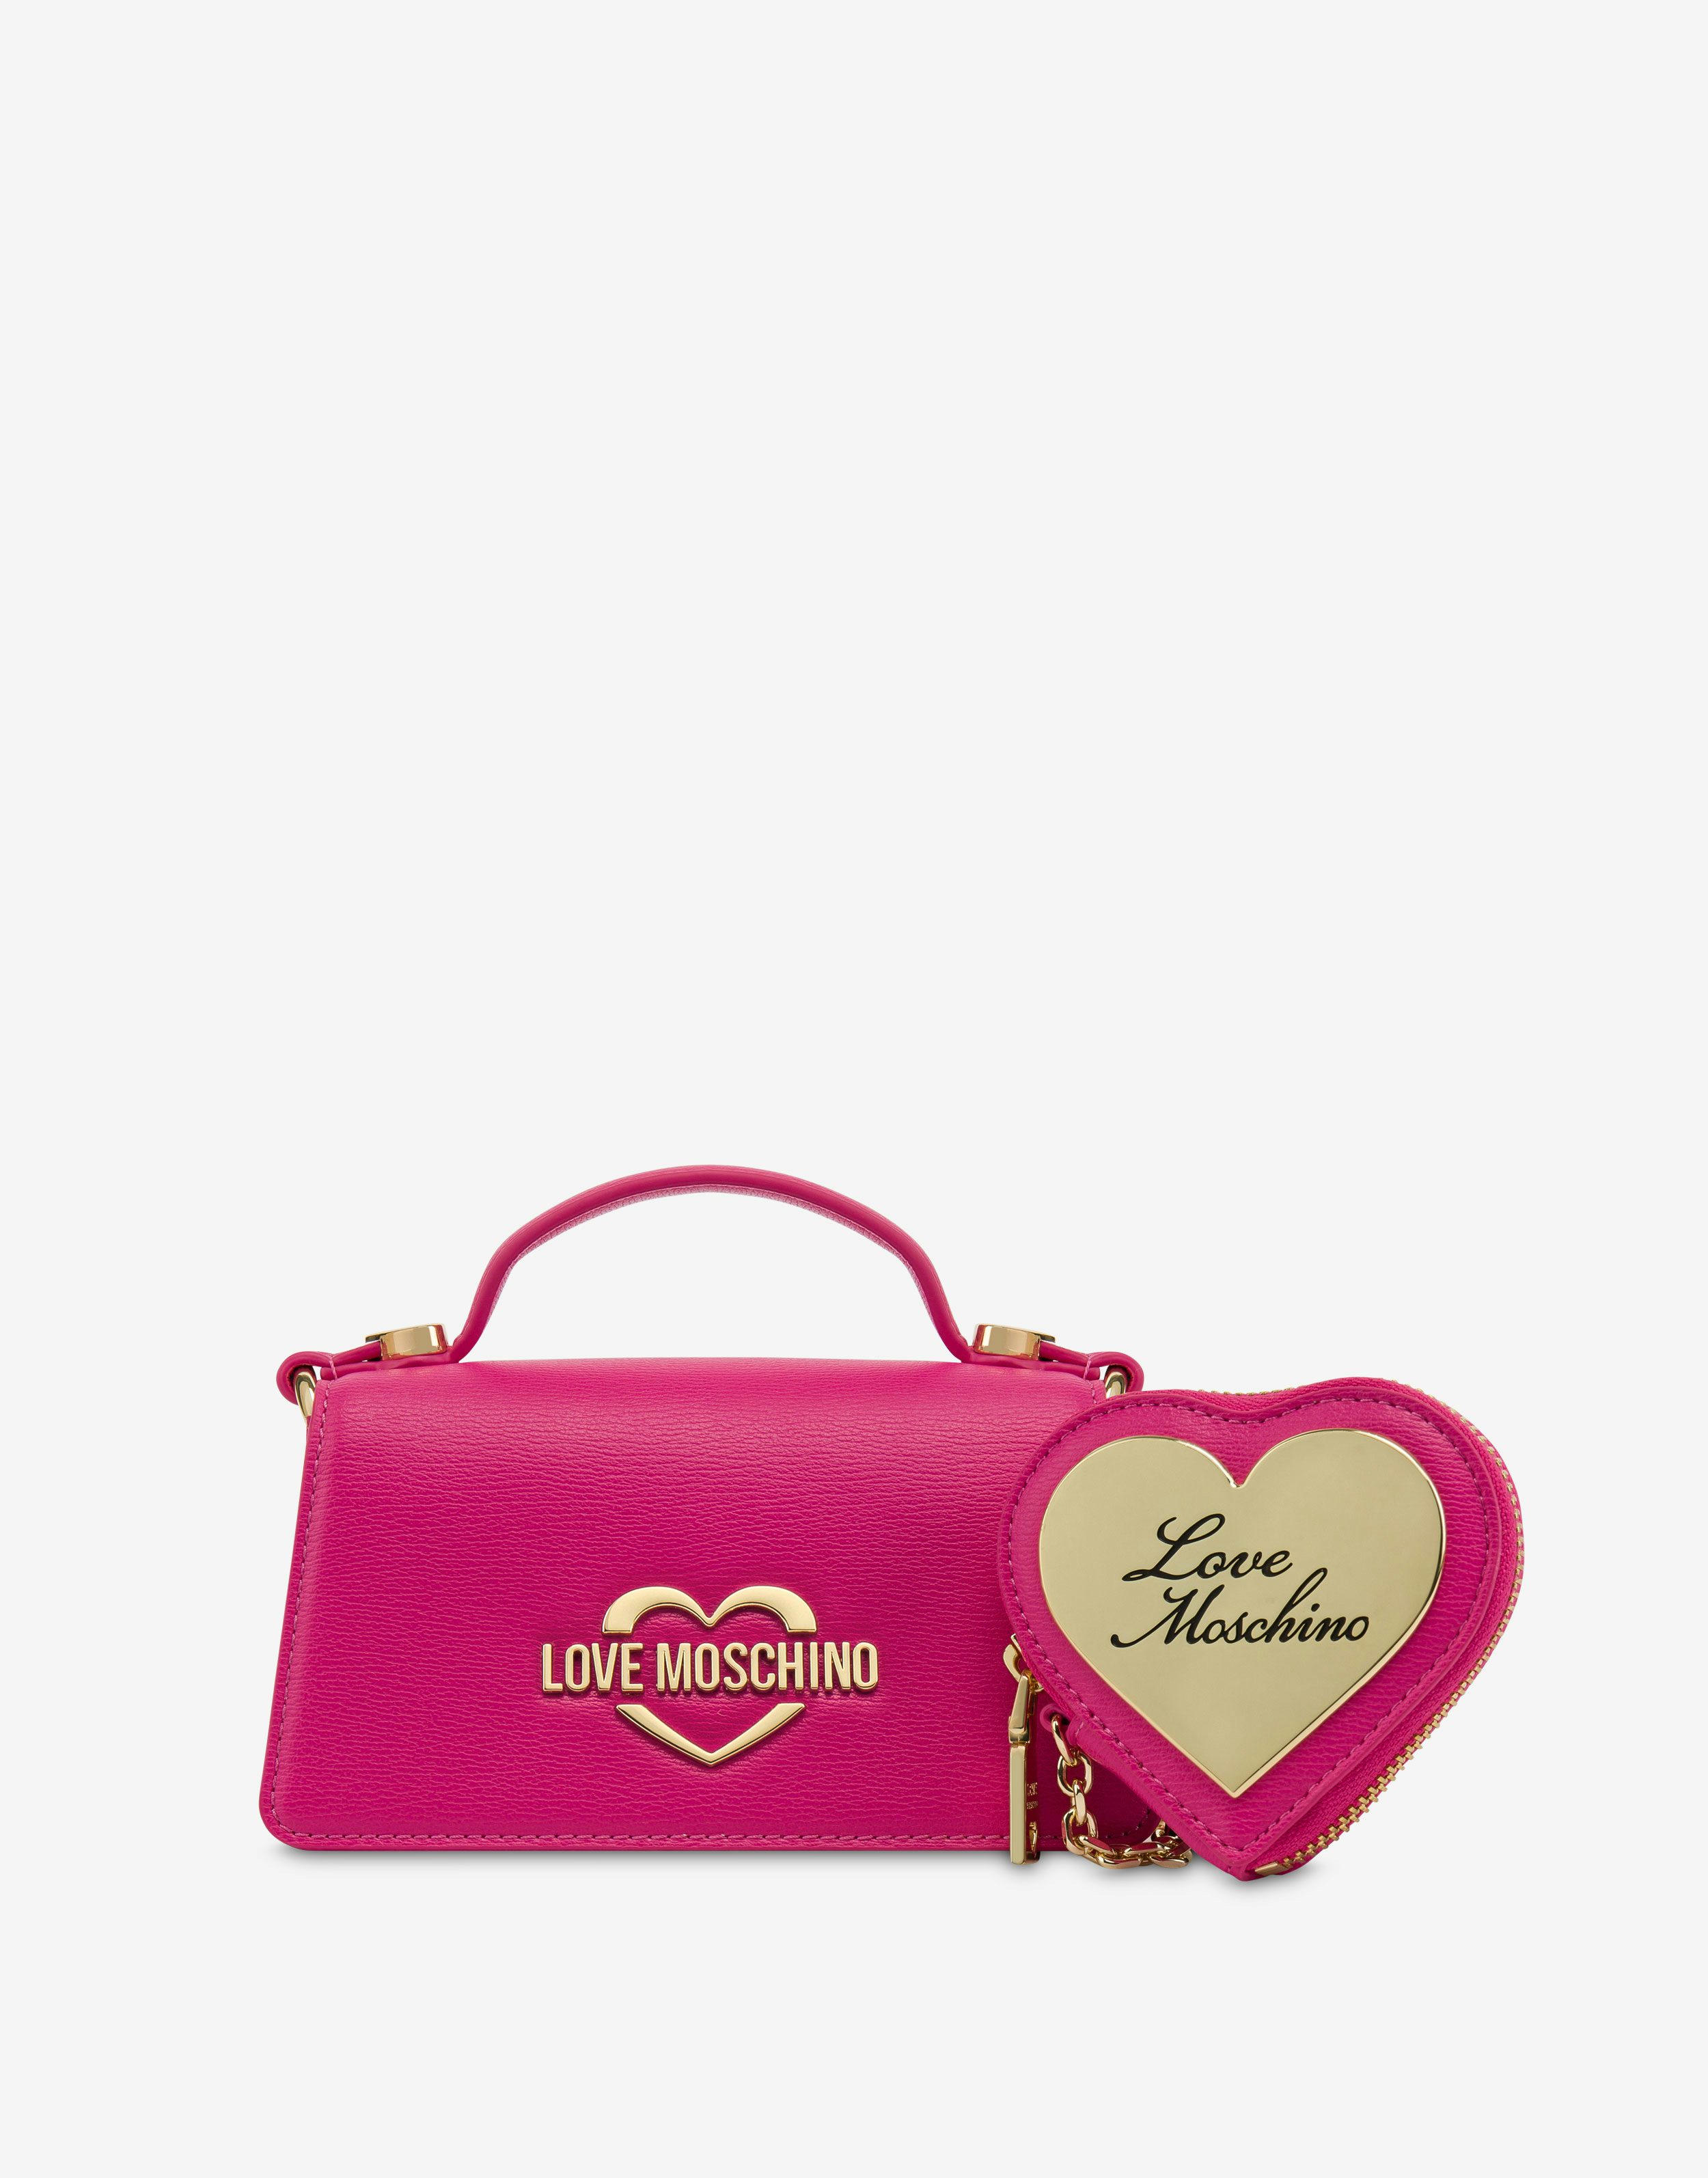 Hollies mini bag with heart clutch